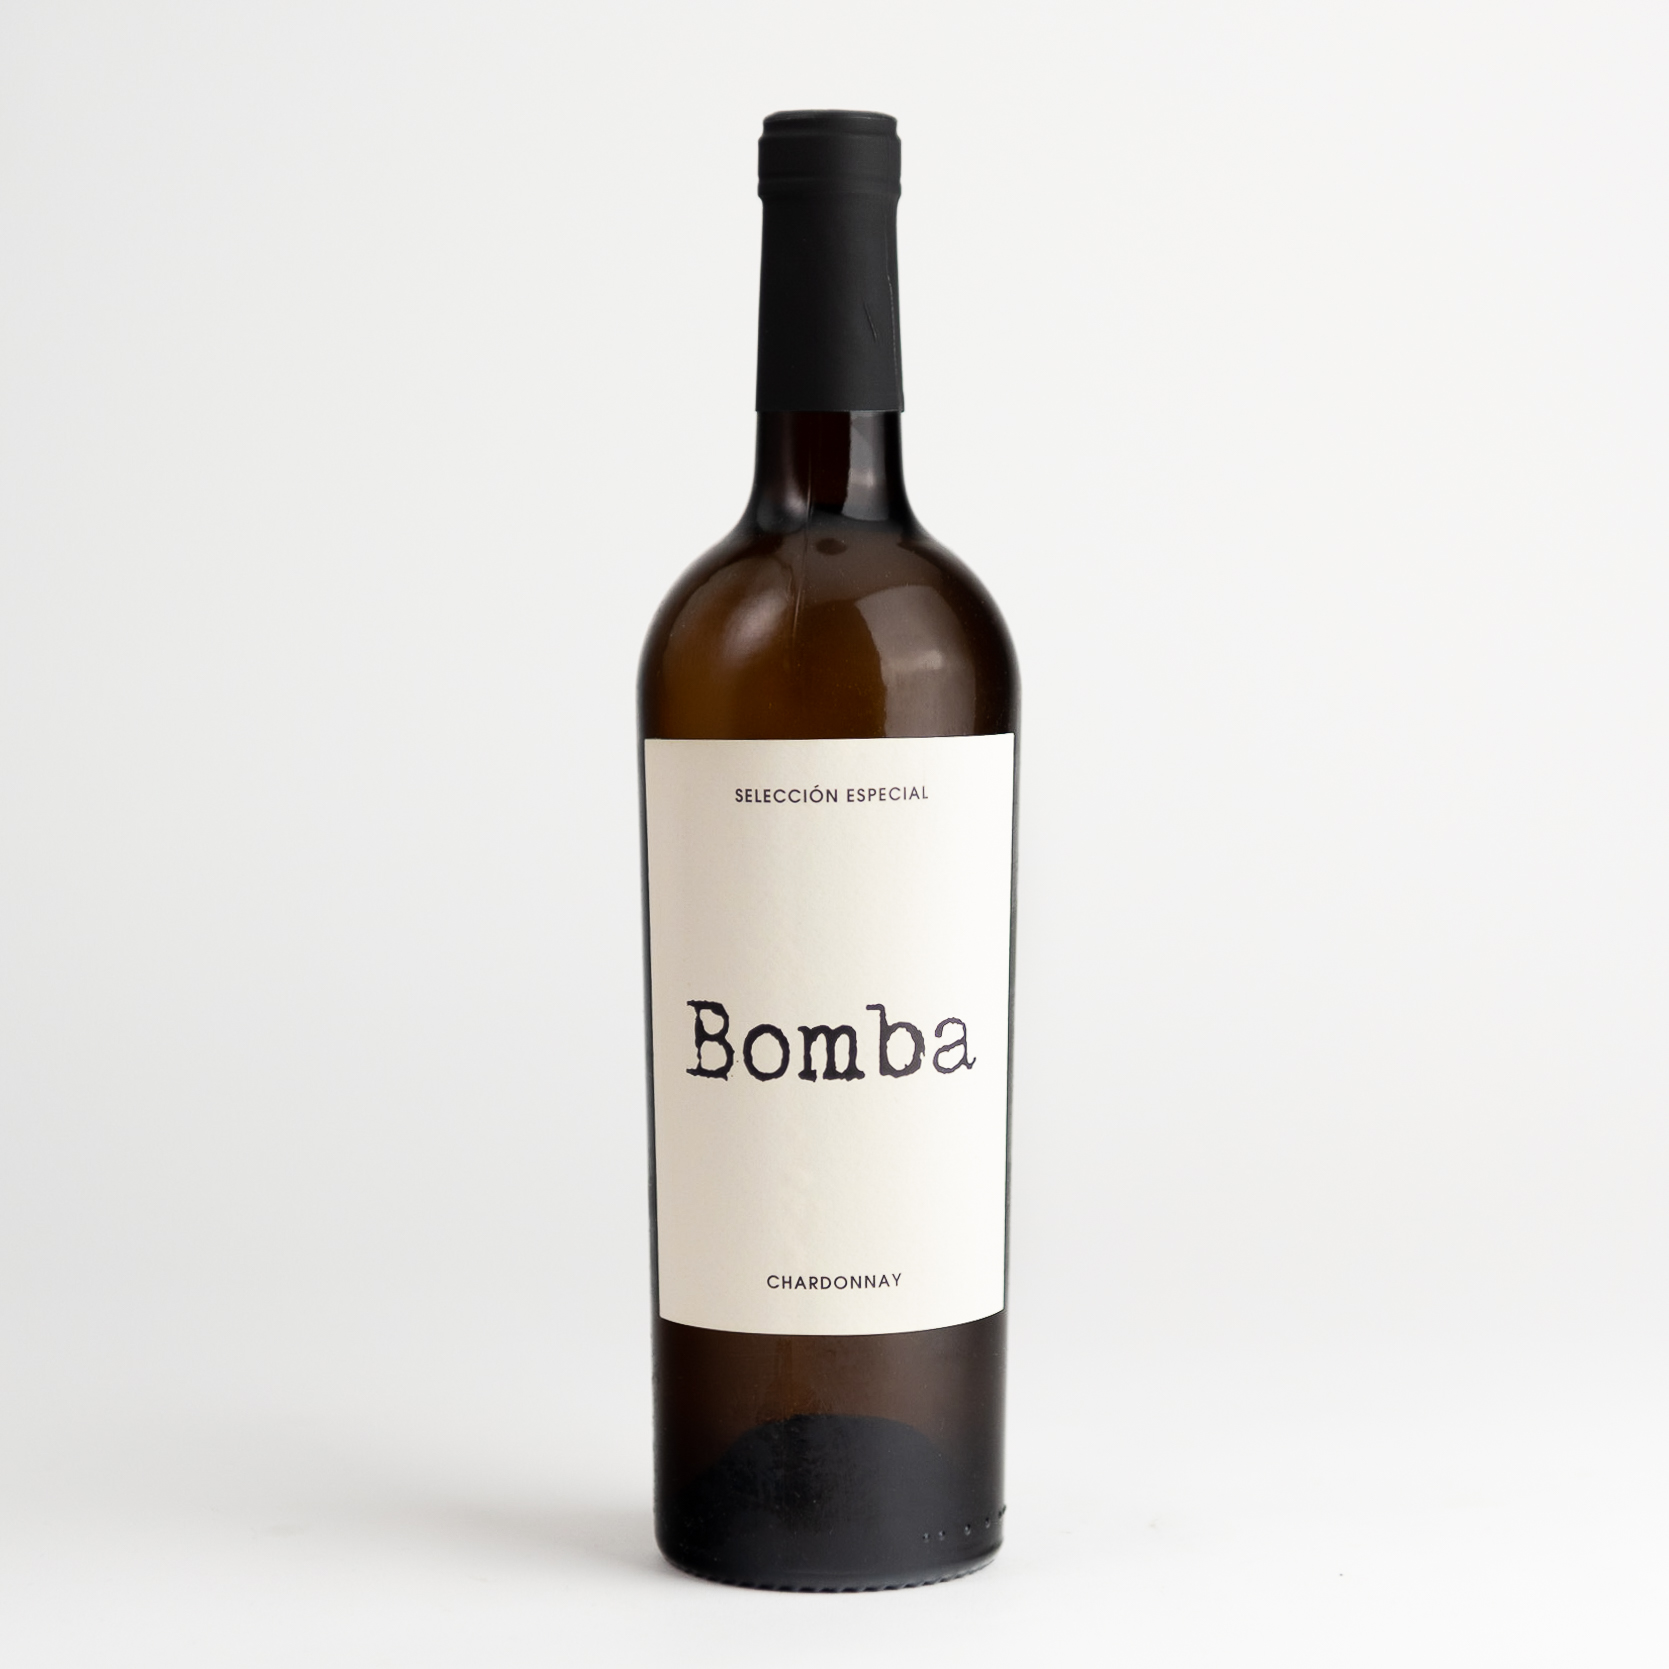 Bomba Chardonnay